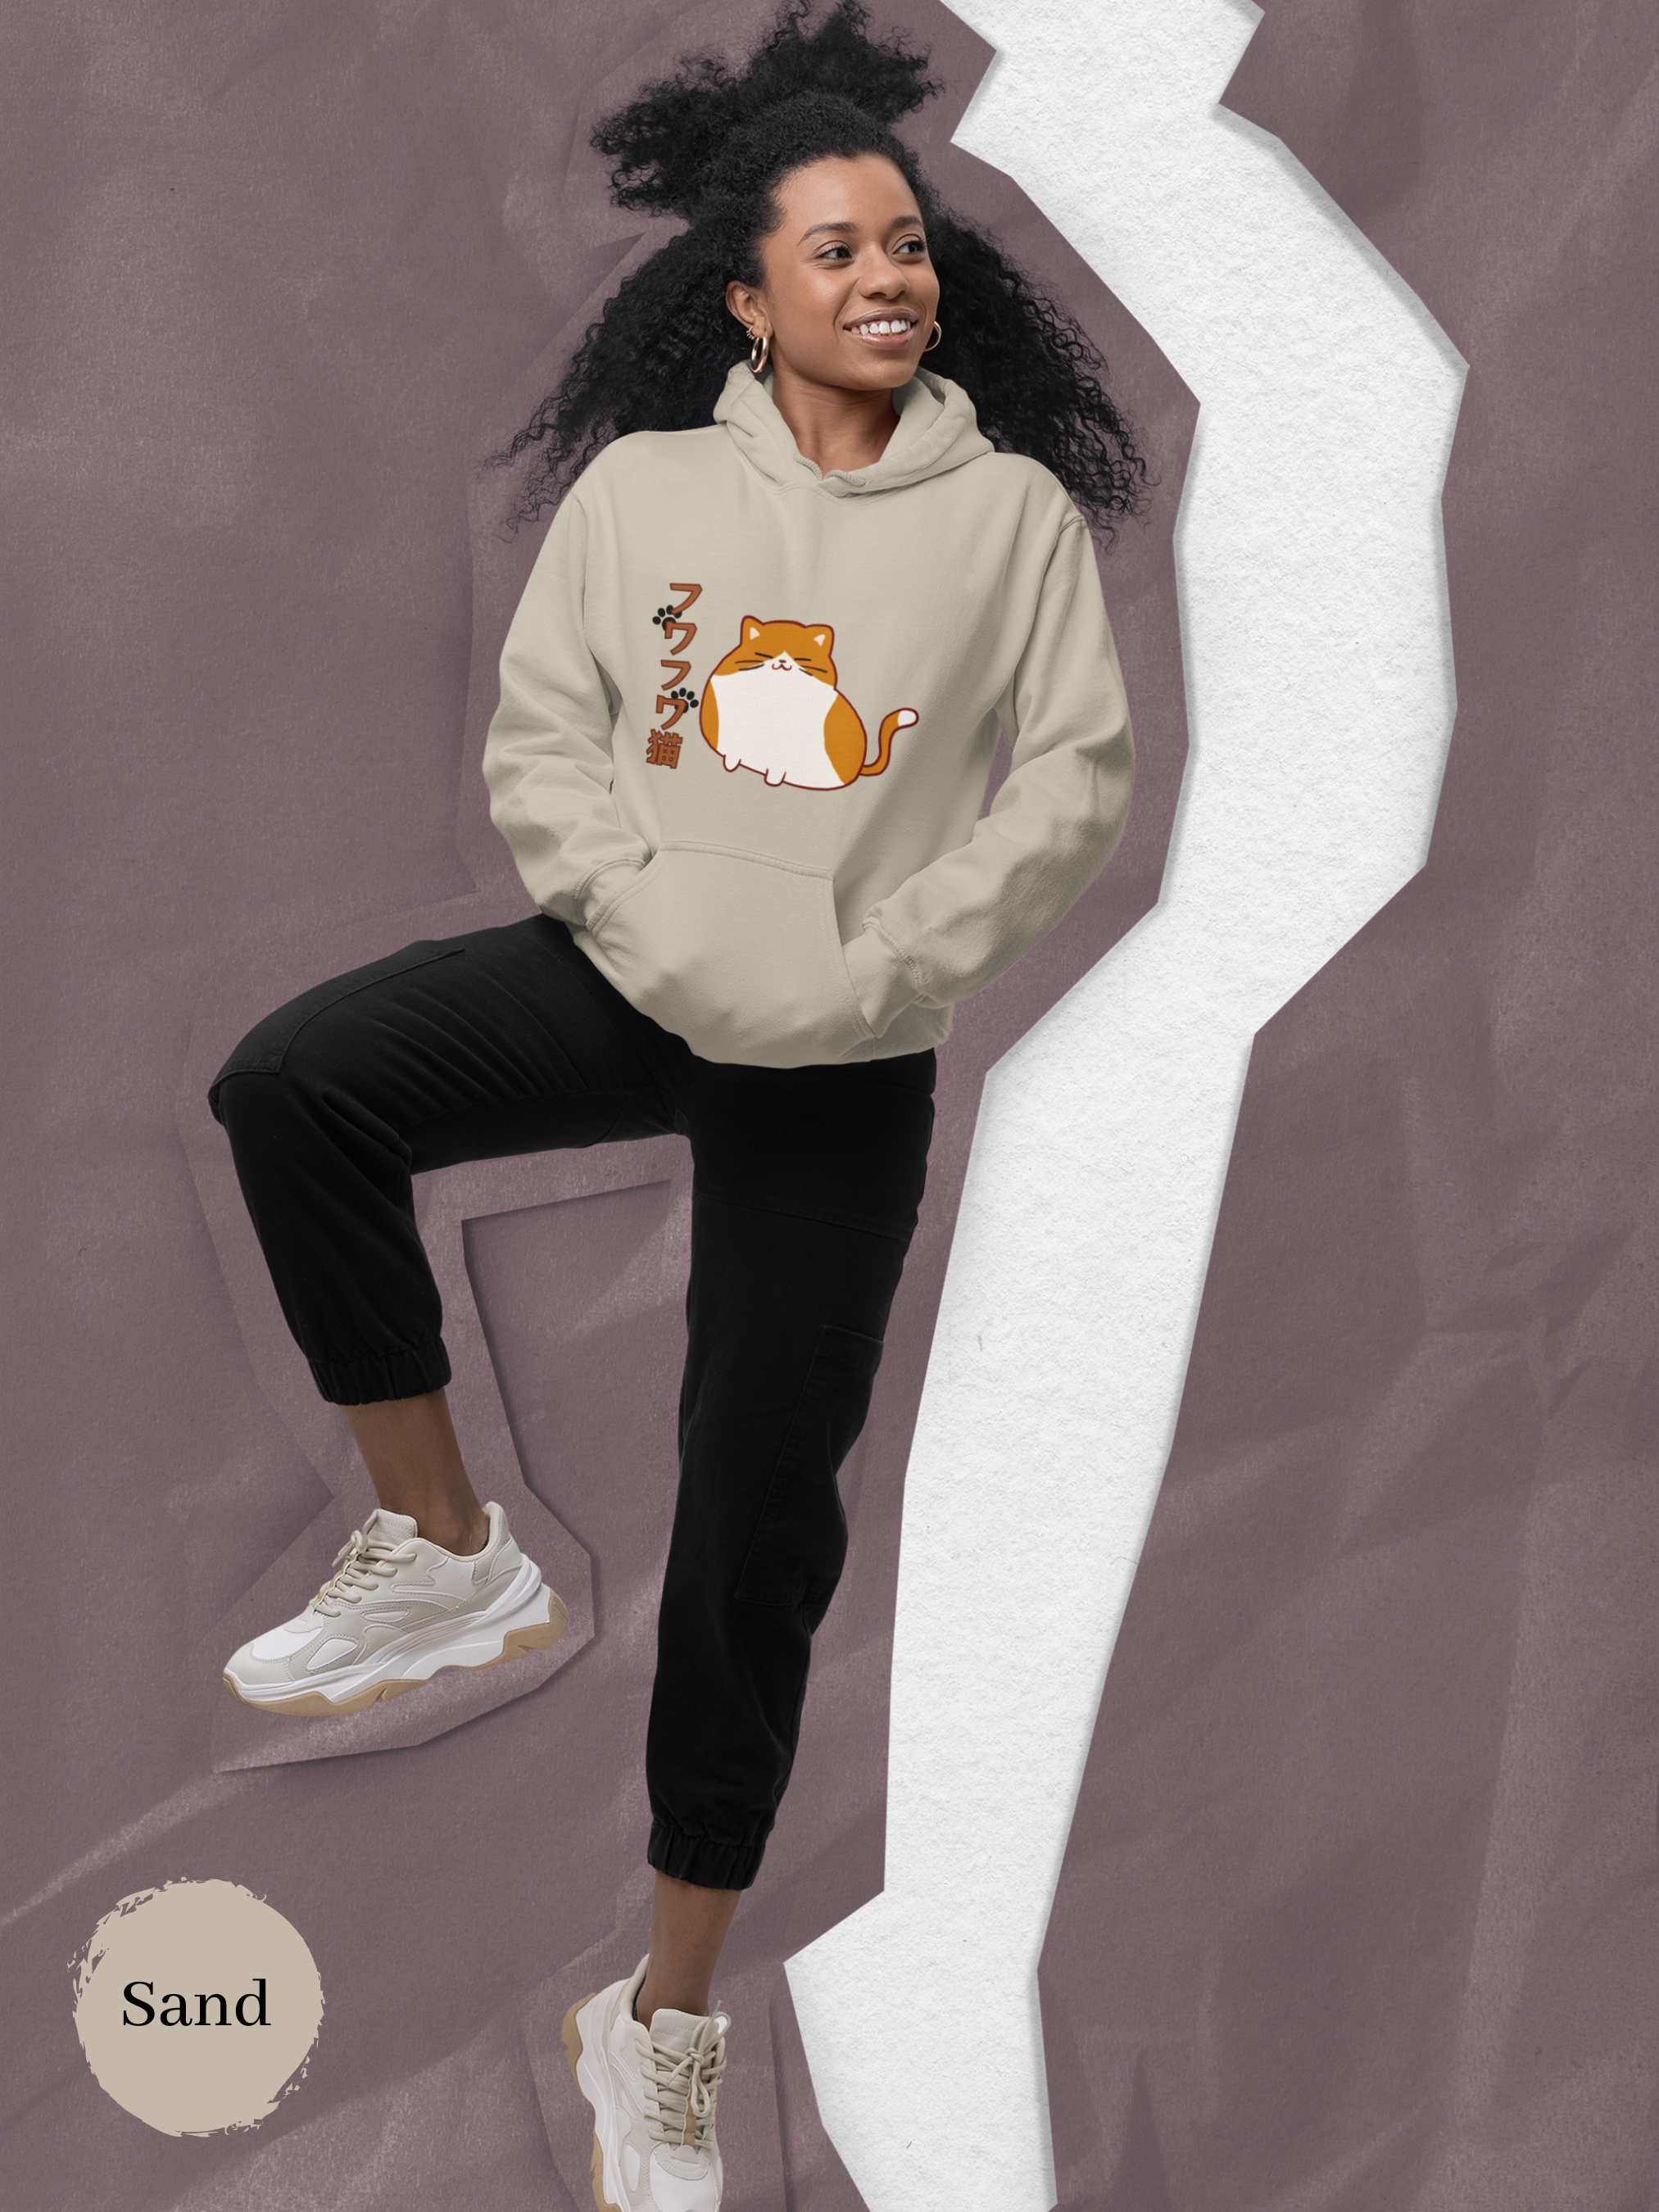 Cat Hoodie: Chubby Mochi Cat Illustration - Cat Lover's Sweatshirt - Cute Cat Art - Cozy and Stylish Cat Hooded Sweatshirt